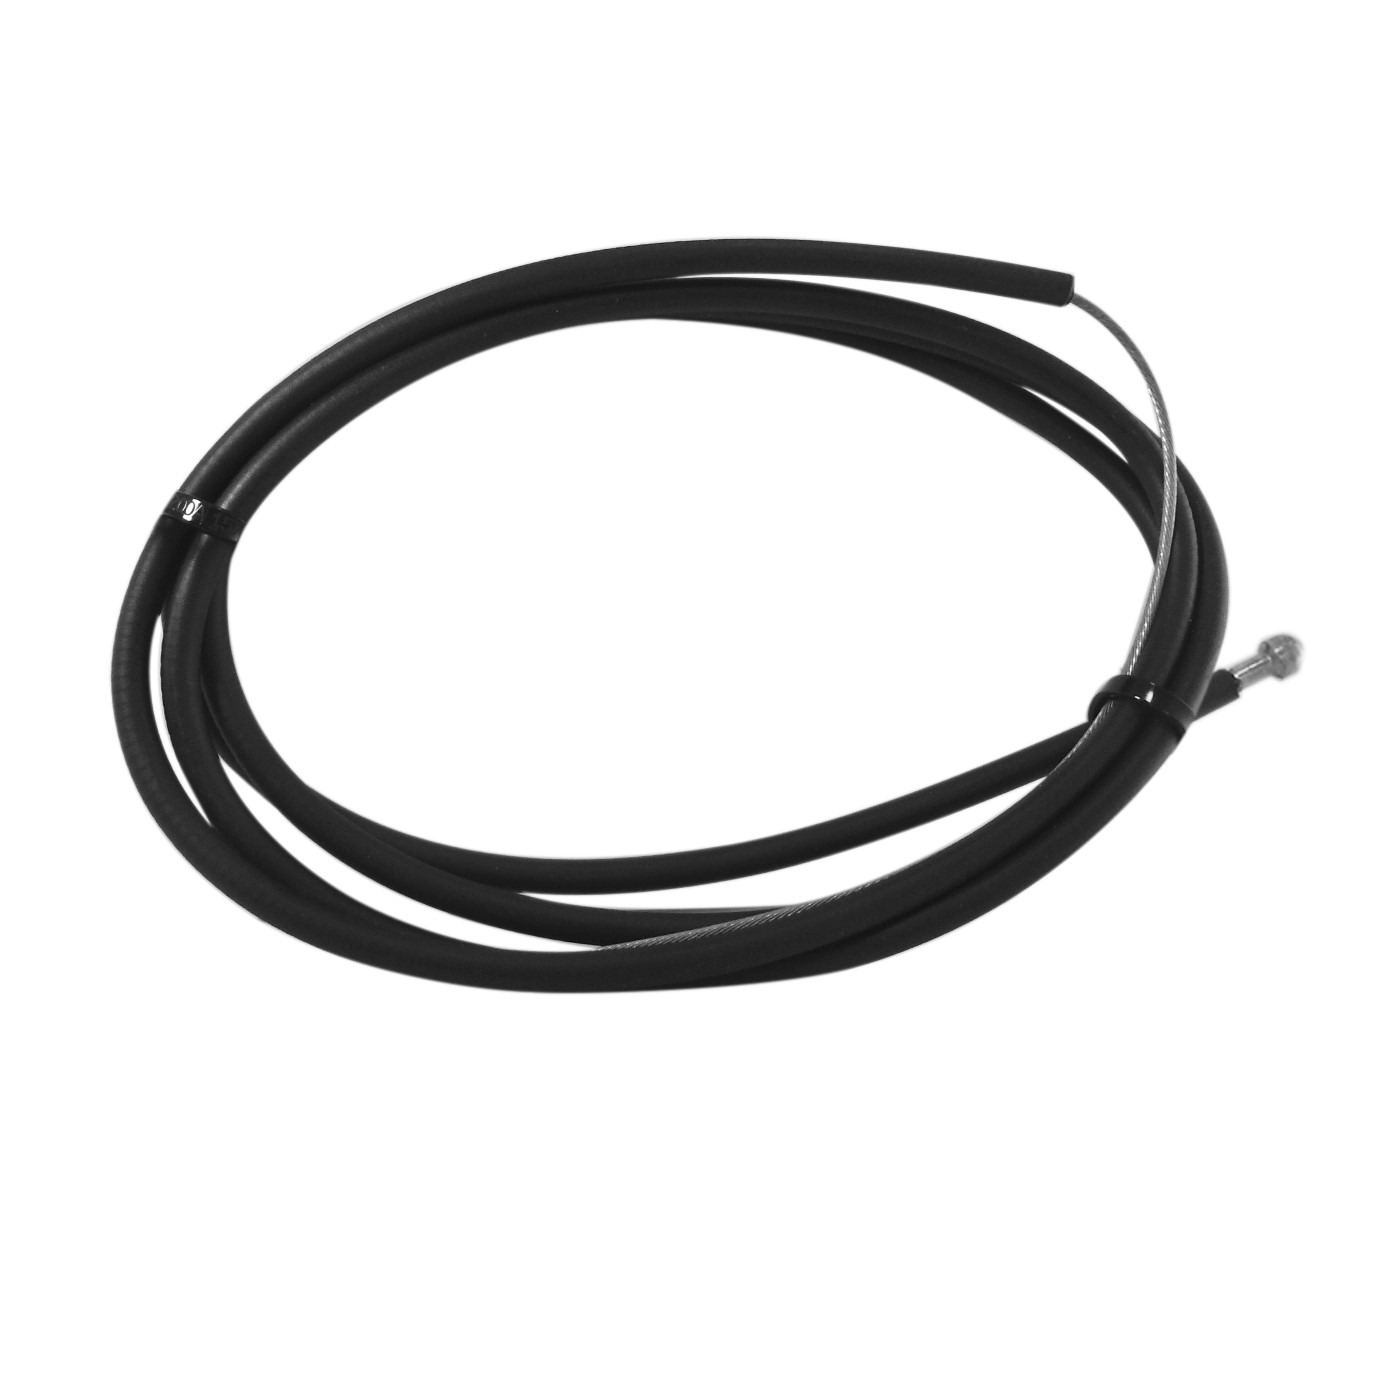 Cable con Forro SHIMANO 1400X1600mm para Palanca de Freno Trasero Ruta